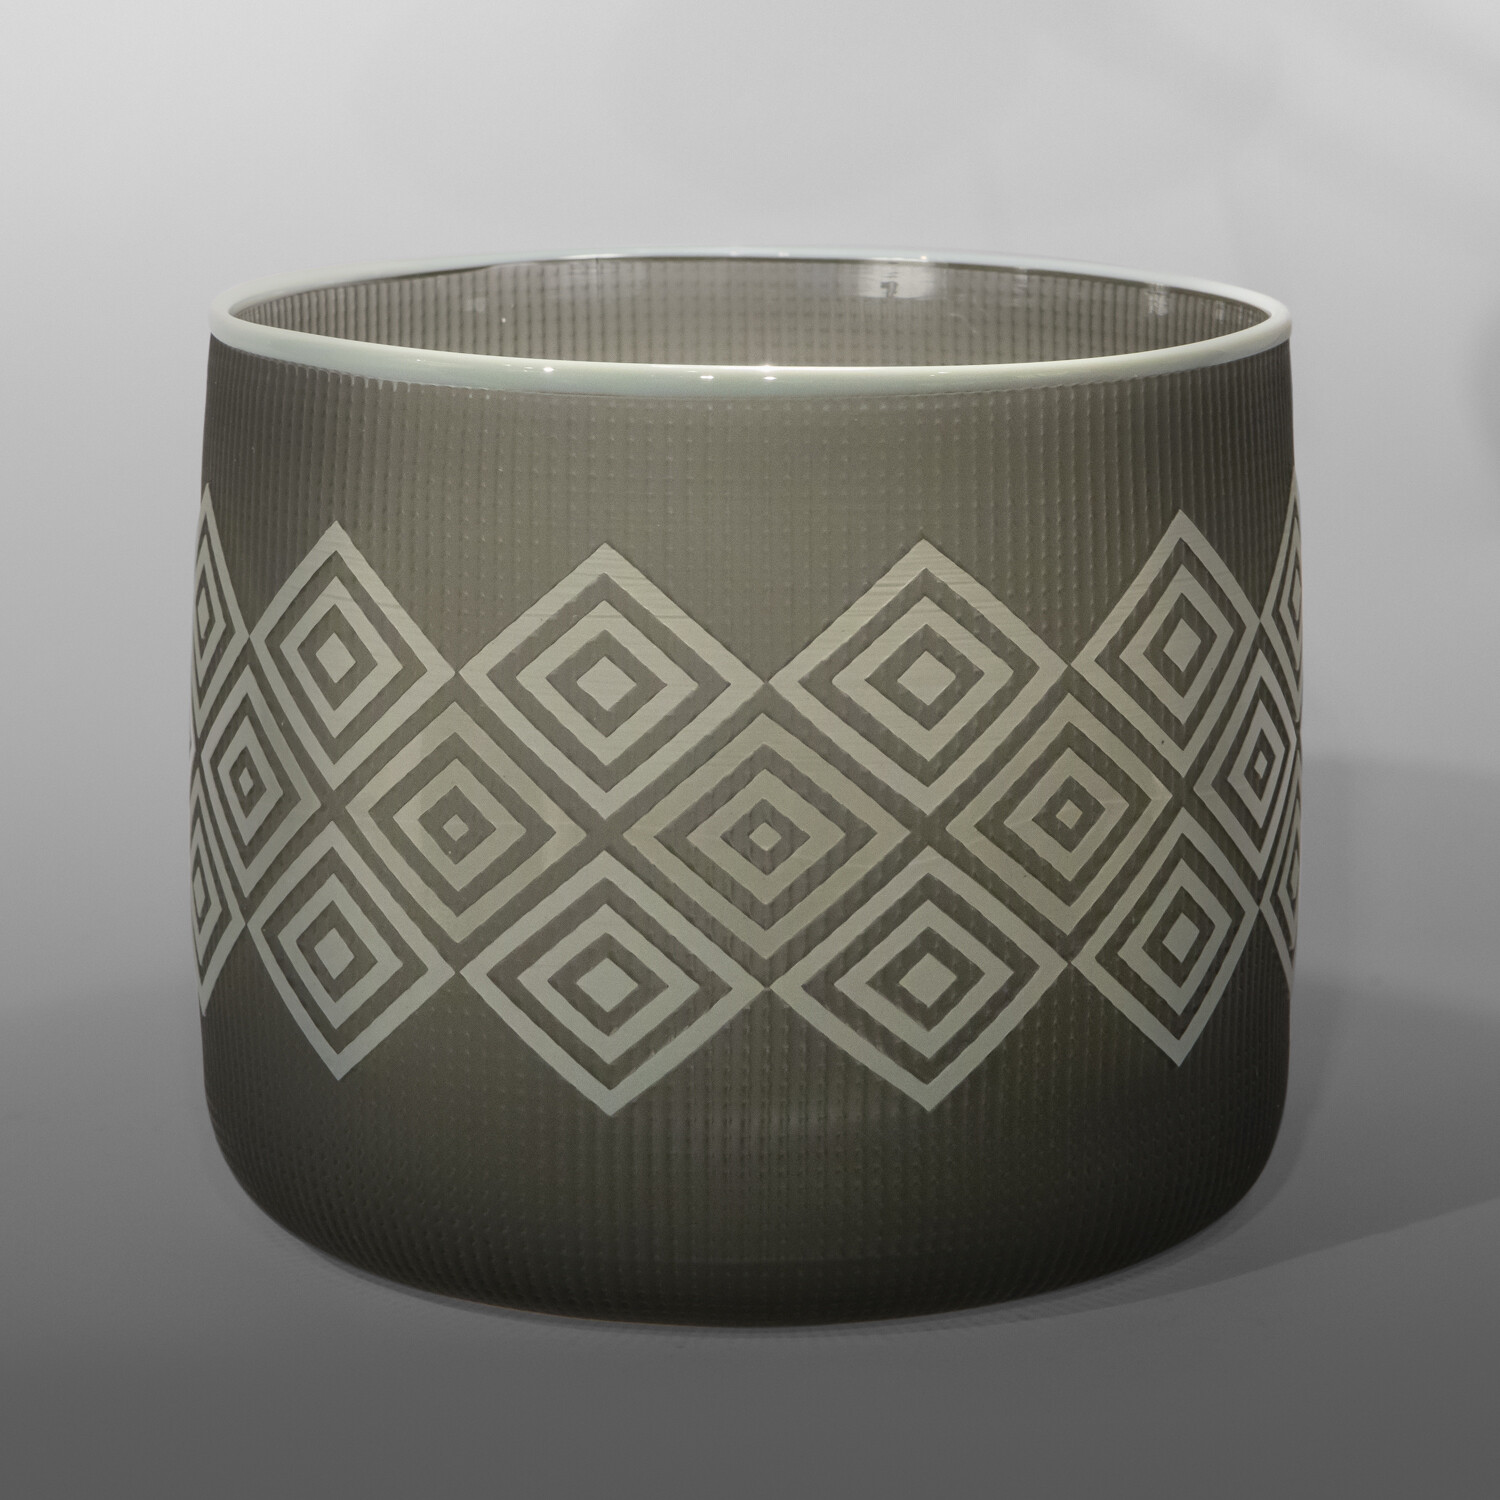 Fog Grey Basket
Preston Singletary
Tlingit
Blown and sand-carved glass
8½” dia. x 7"
$8000